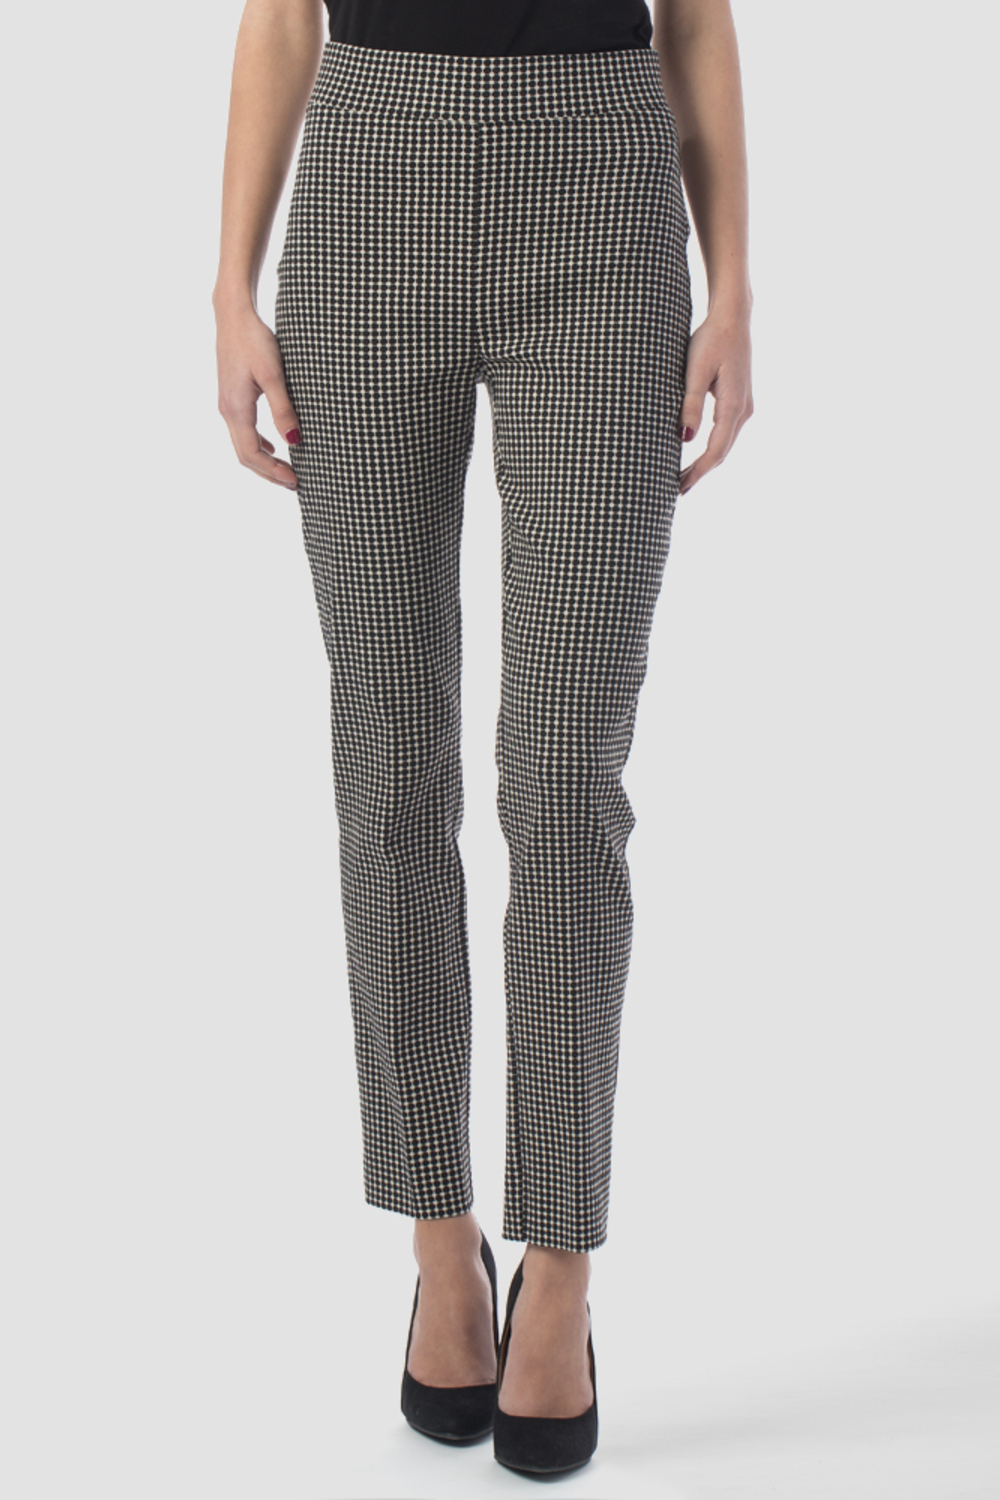 Joseph Ribkoff pantalon style 153754. Noir/beige